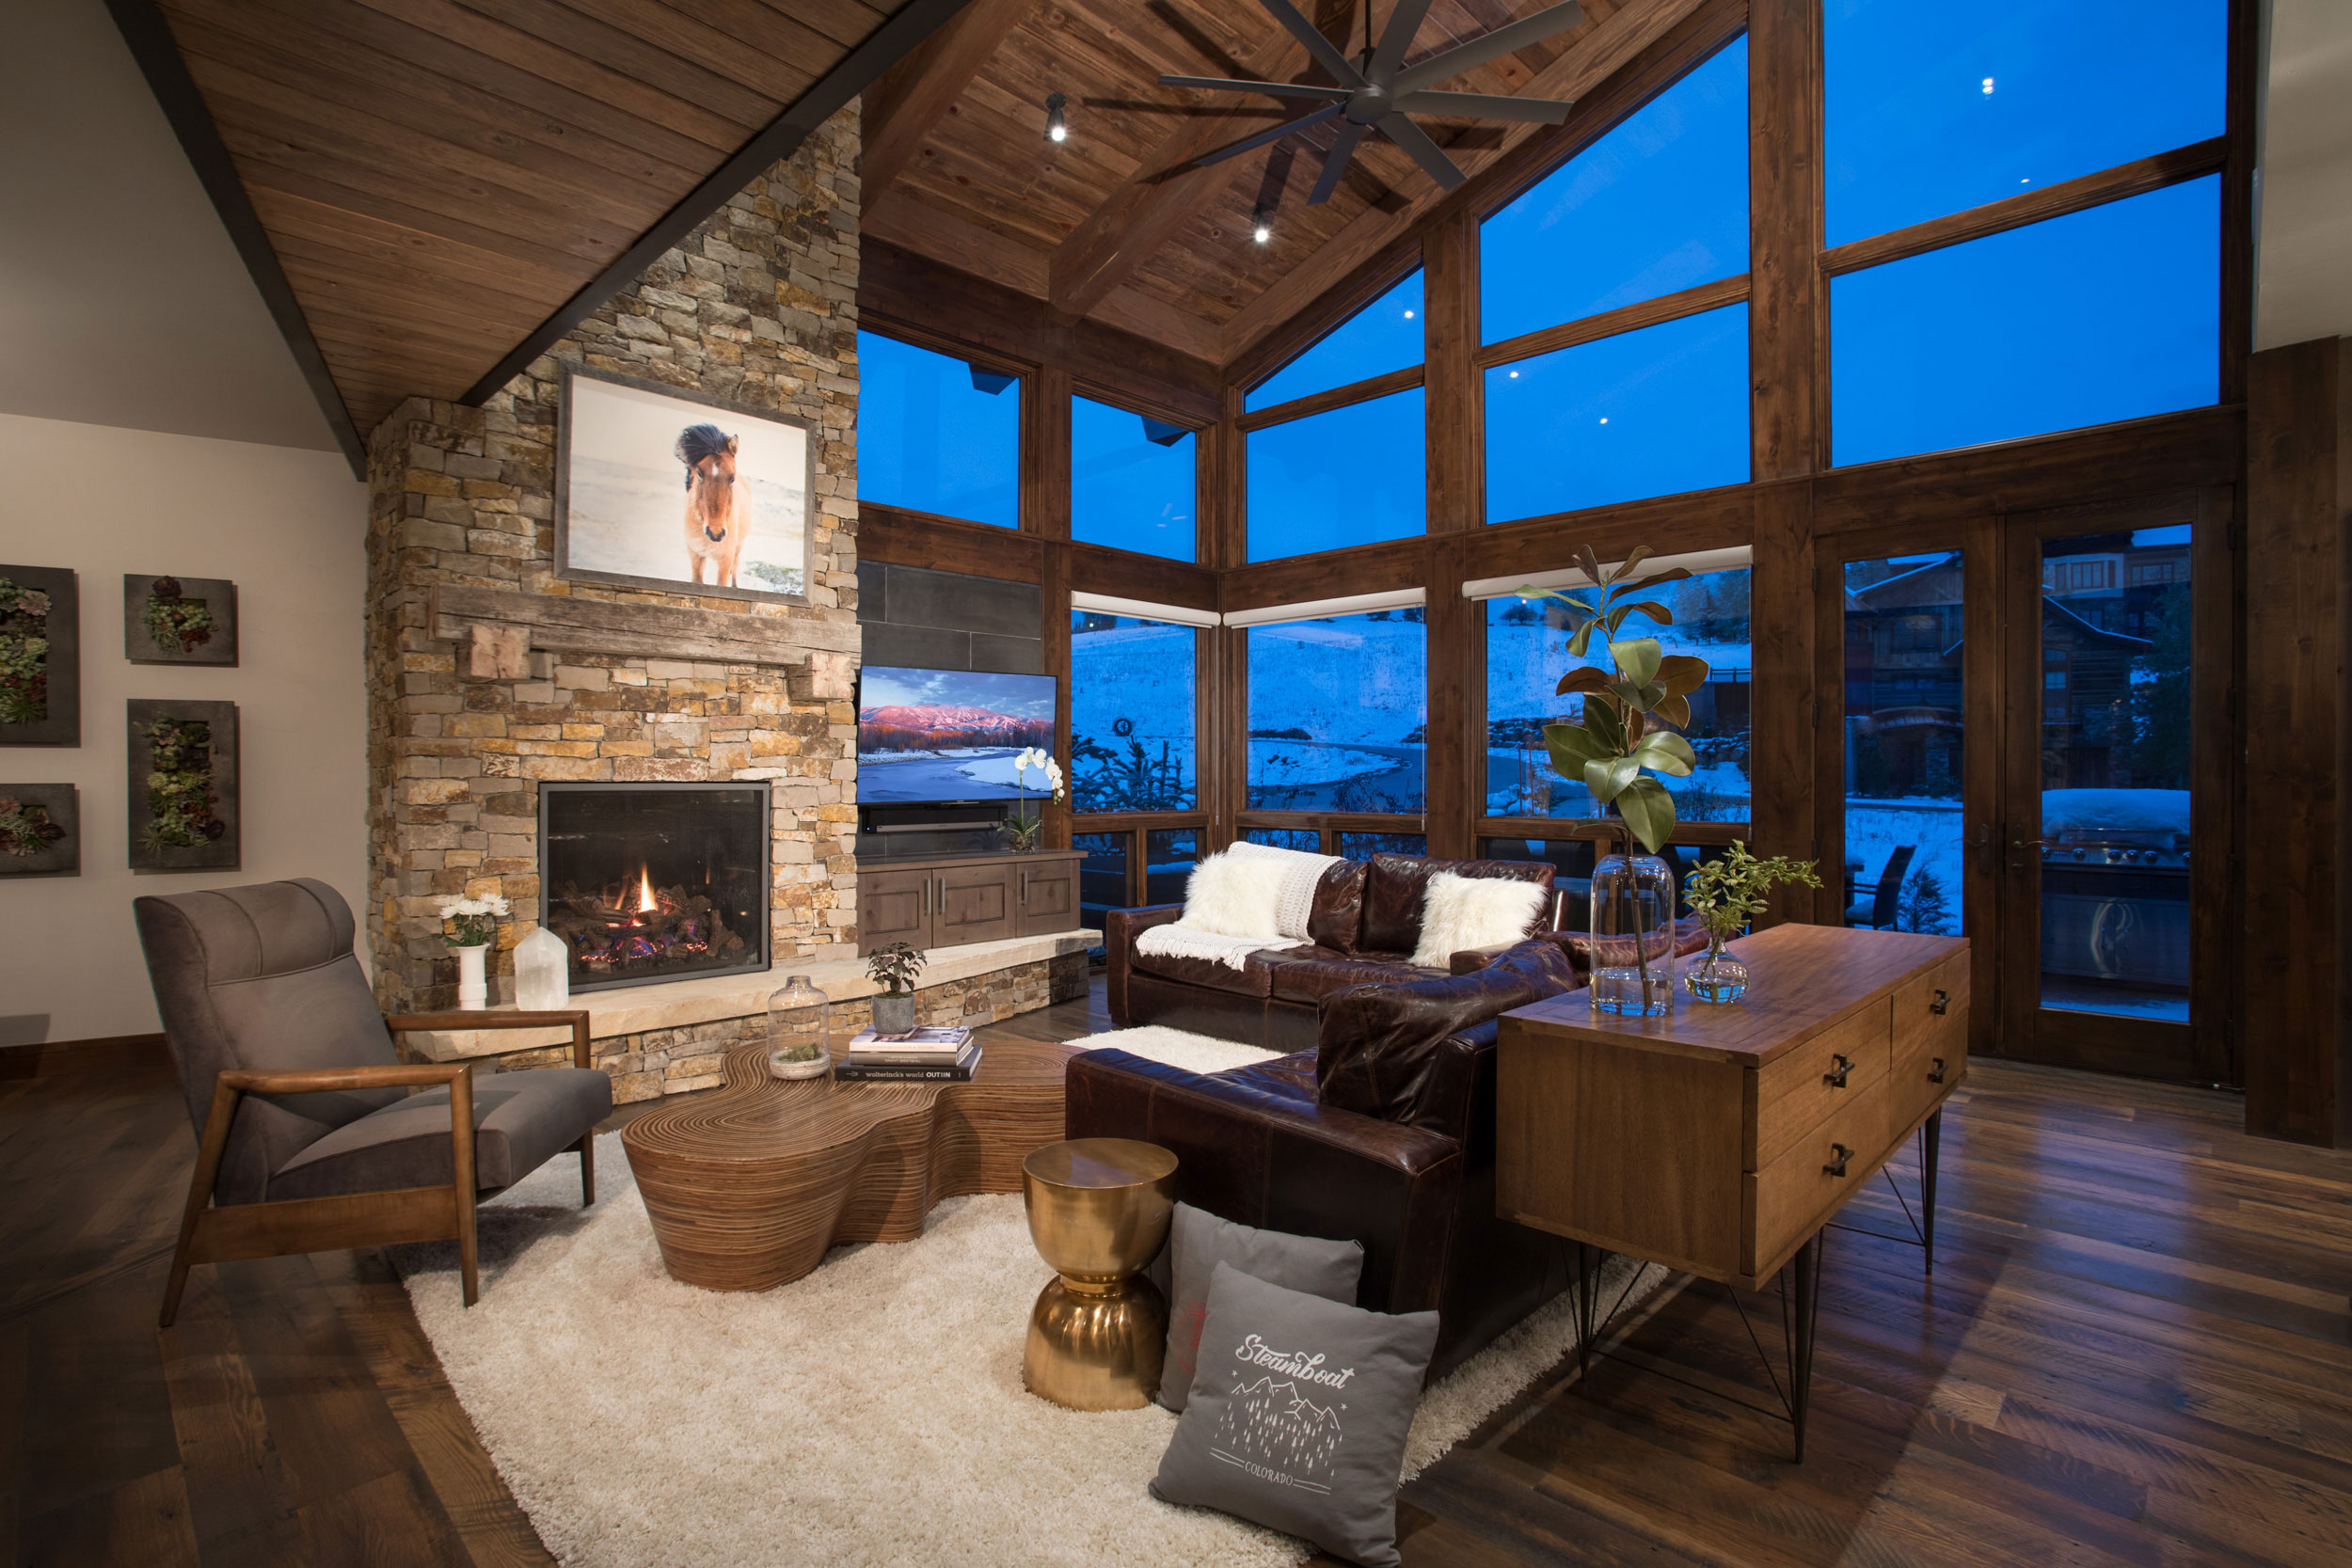 Beautifully designed Hoot Owl Living room by Rumor Designs in Steamboat Springs, CO